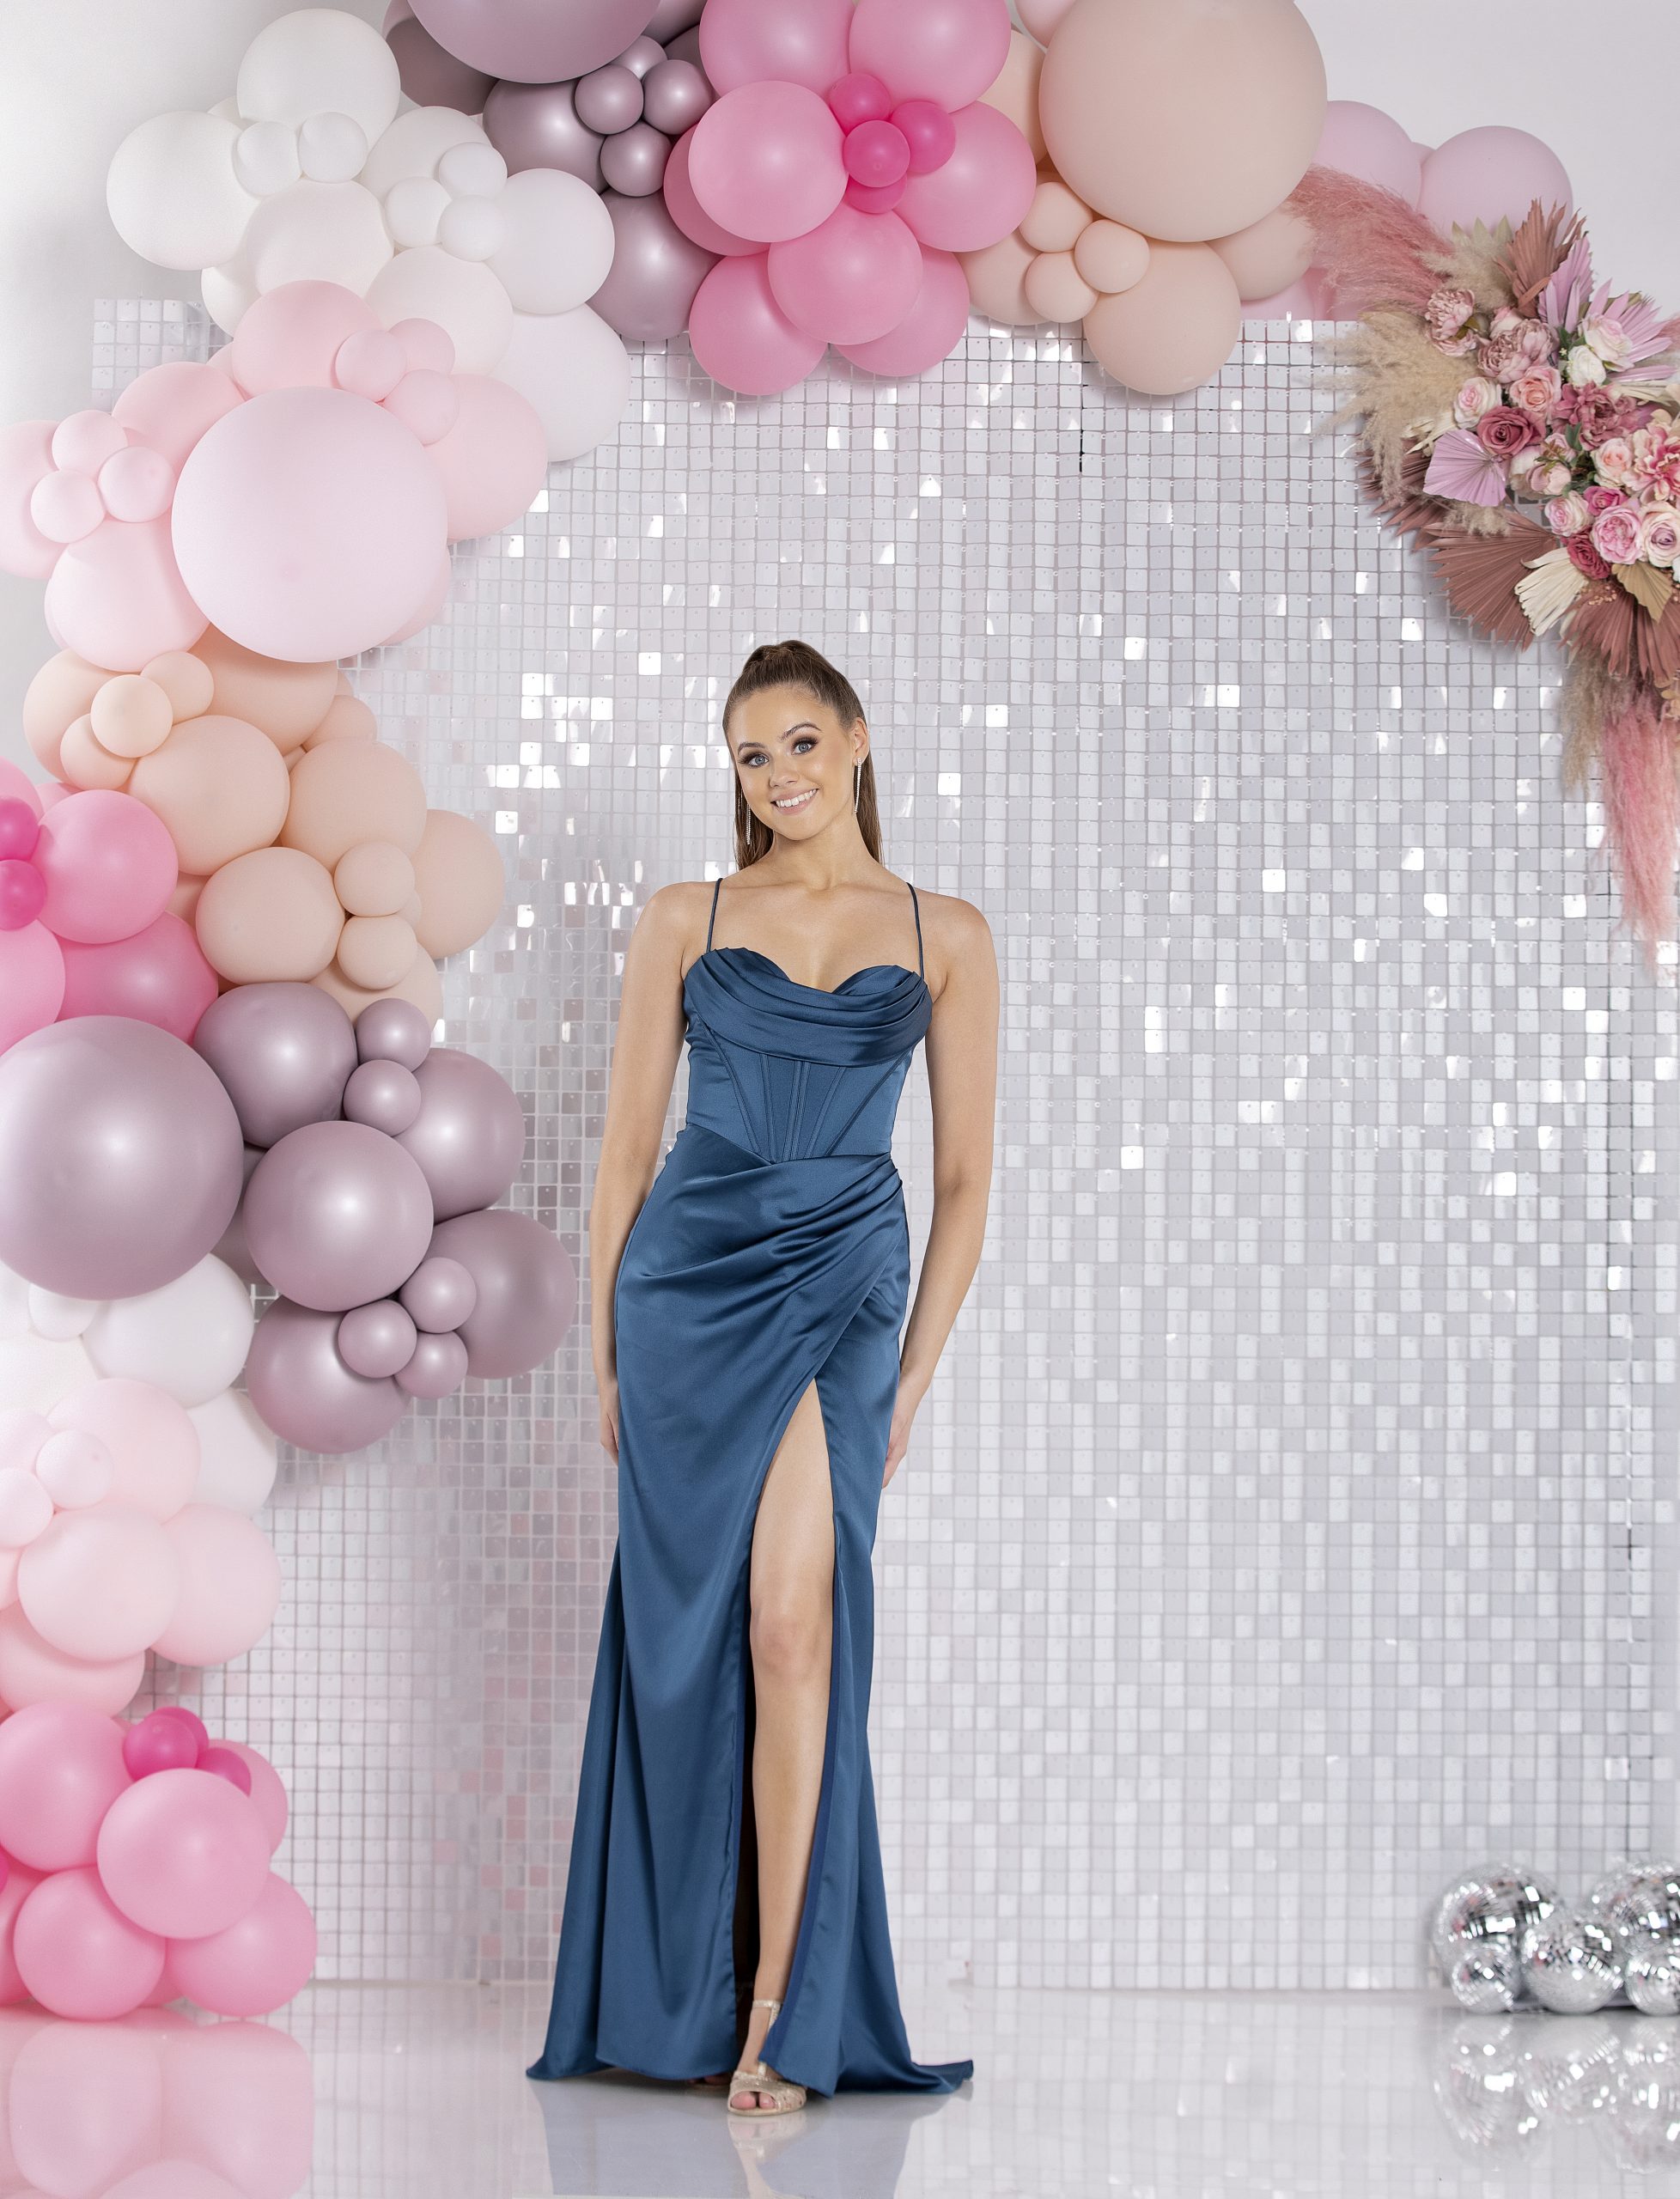 Sequin UK 4 affordable evening gowns online - eDressit.com